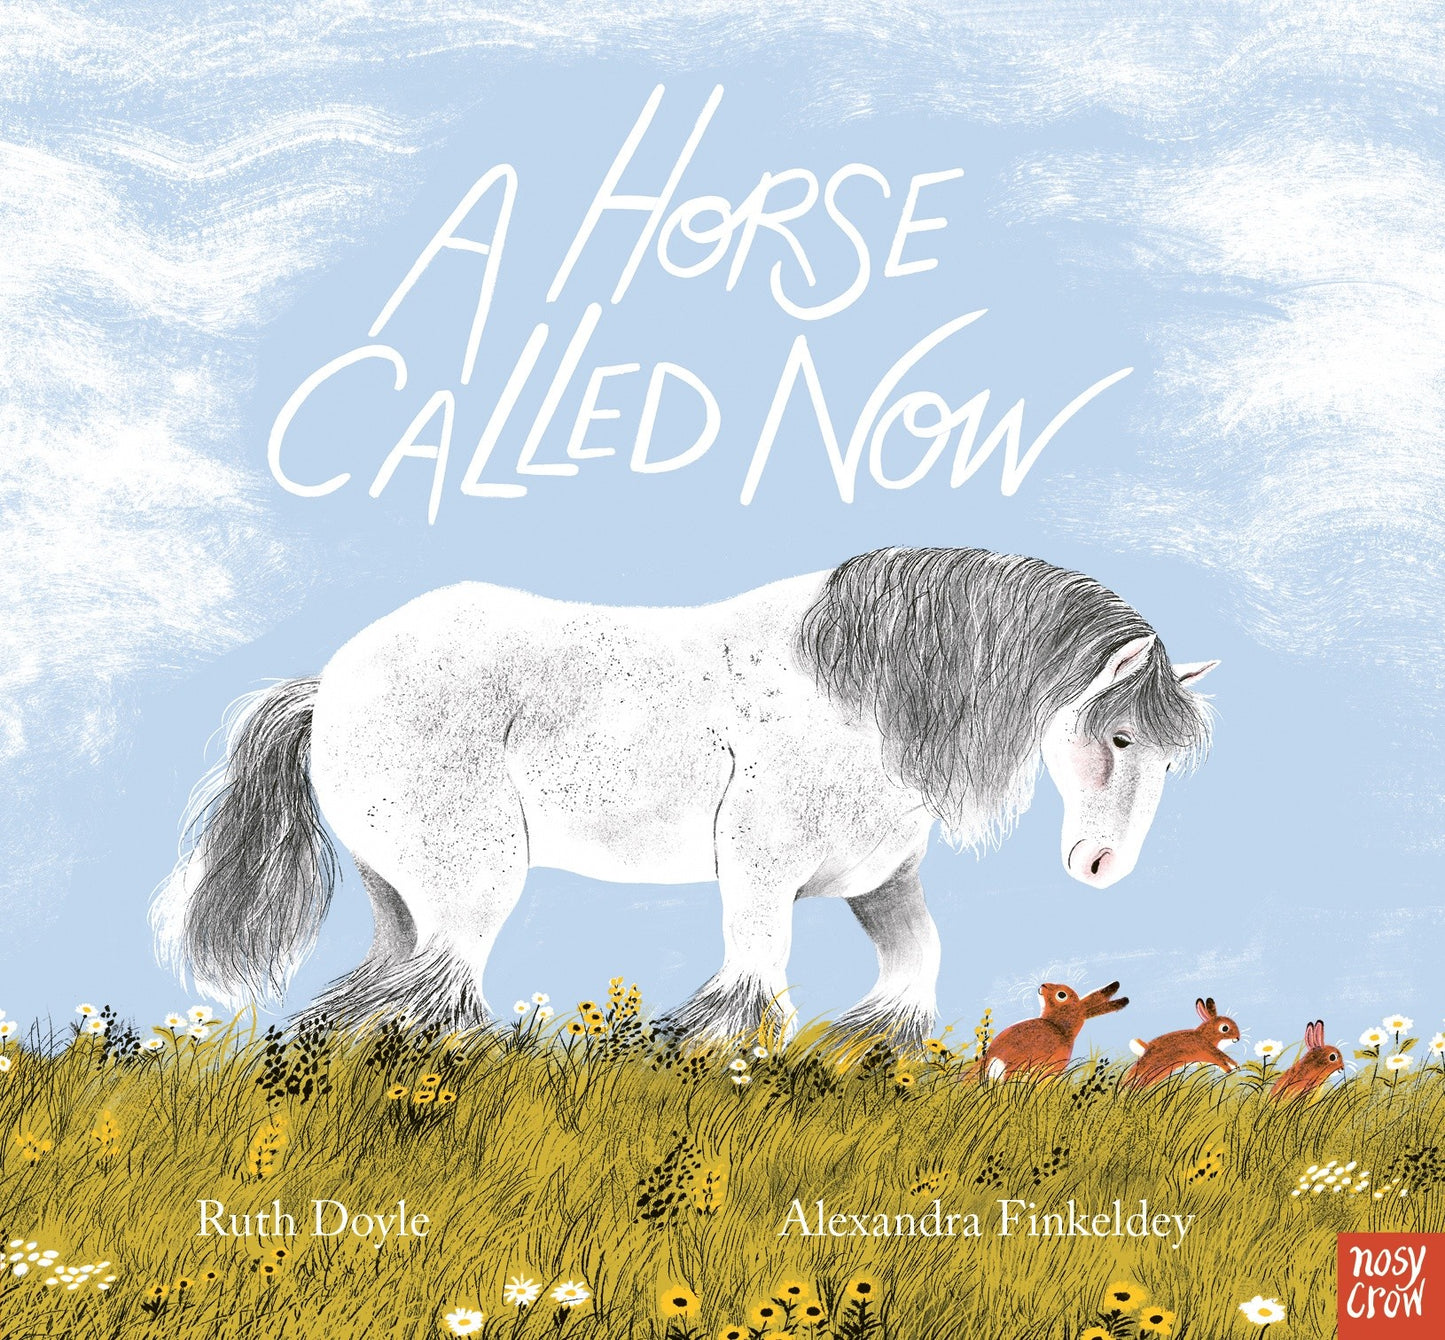 A Horse Called Now - Ruth Doyle, Alexandra Finkeldy